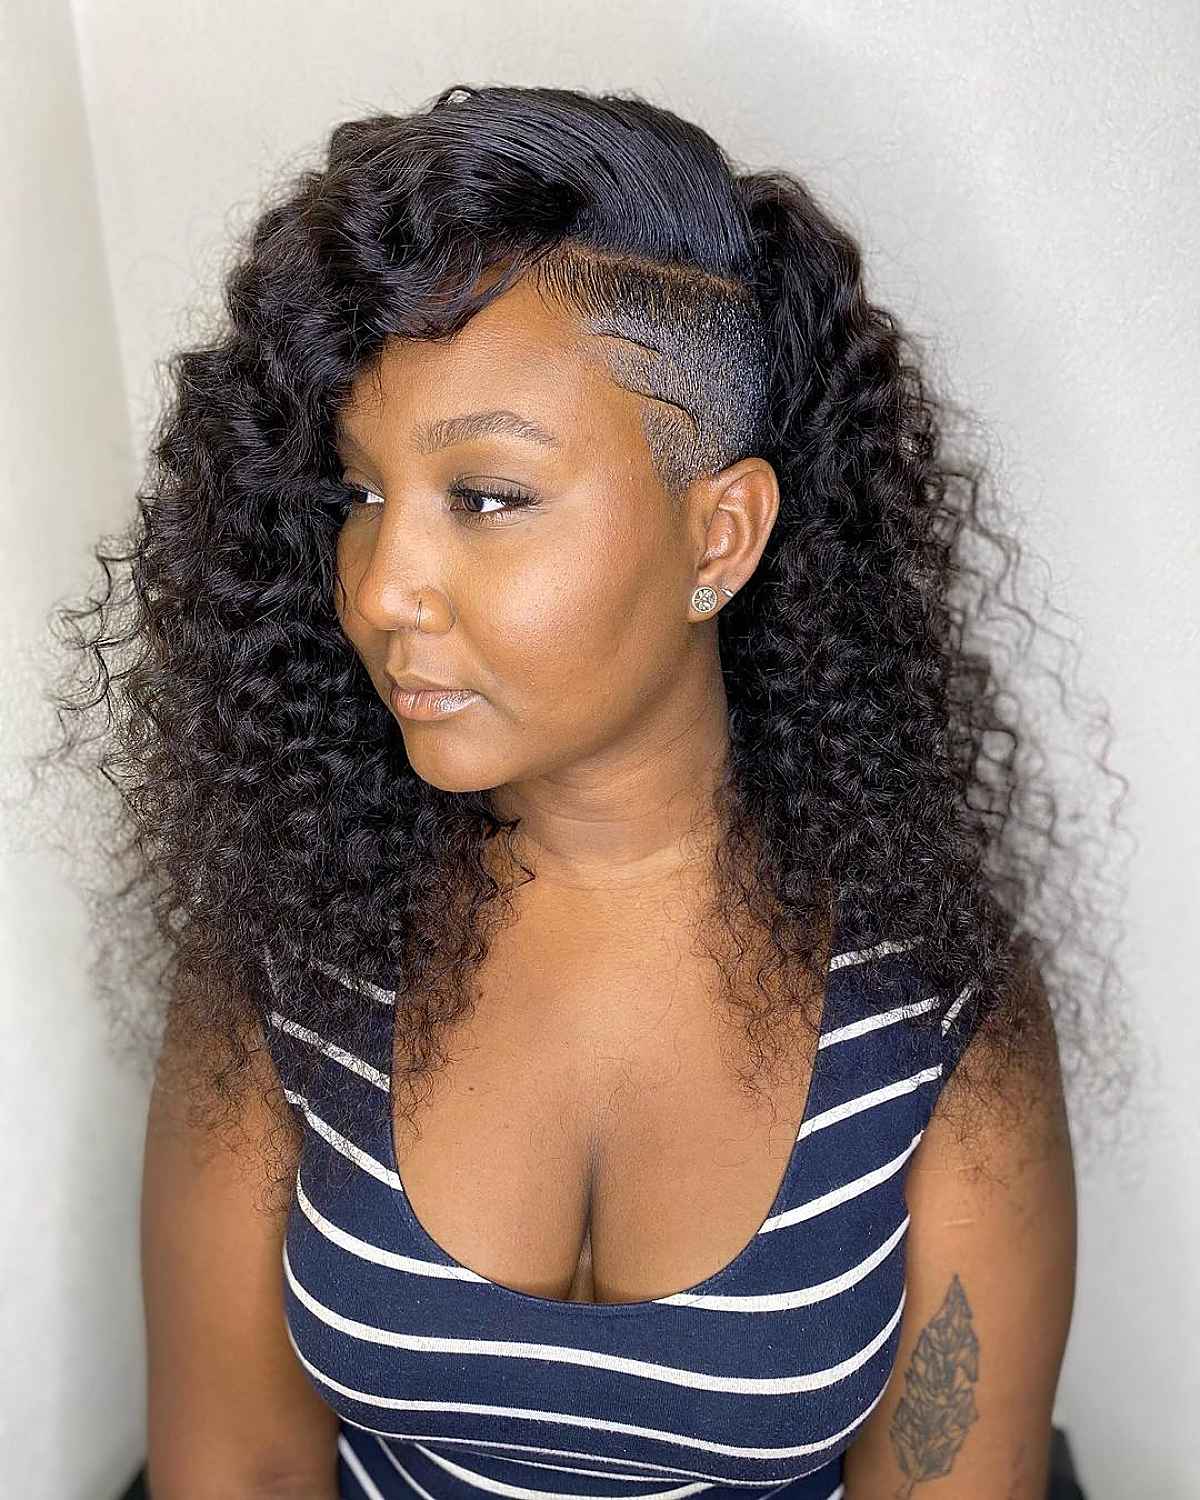 Black girls' half-shaved style